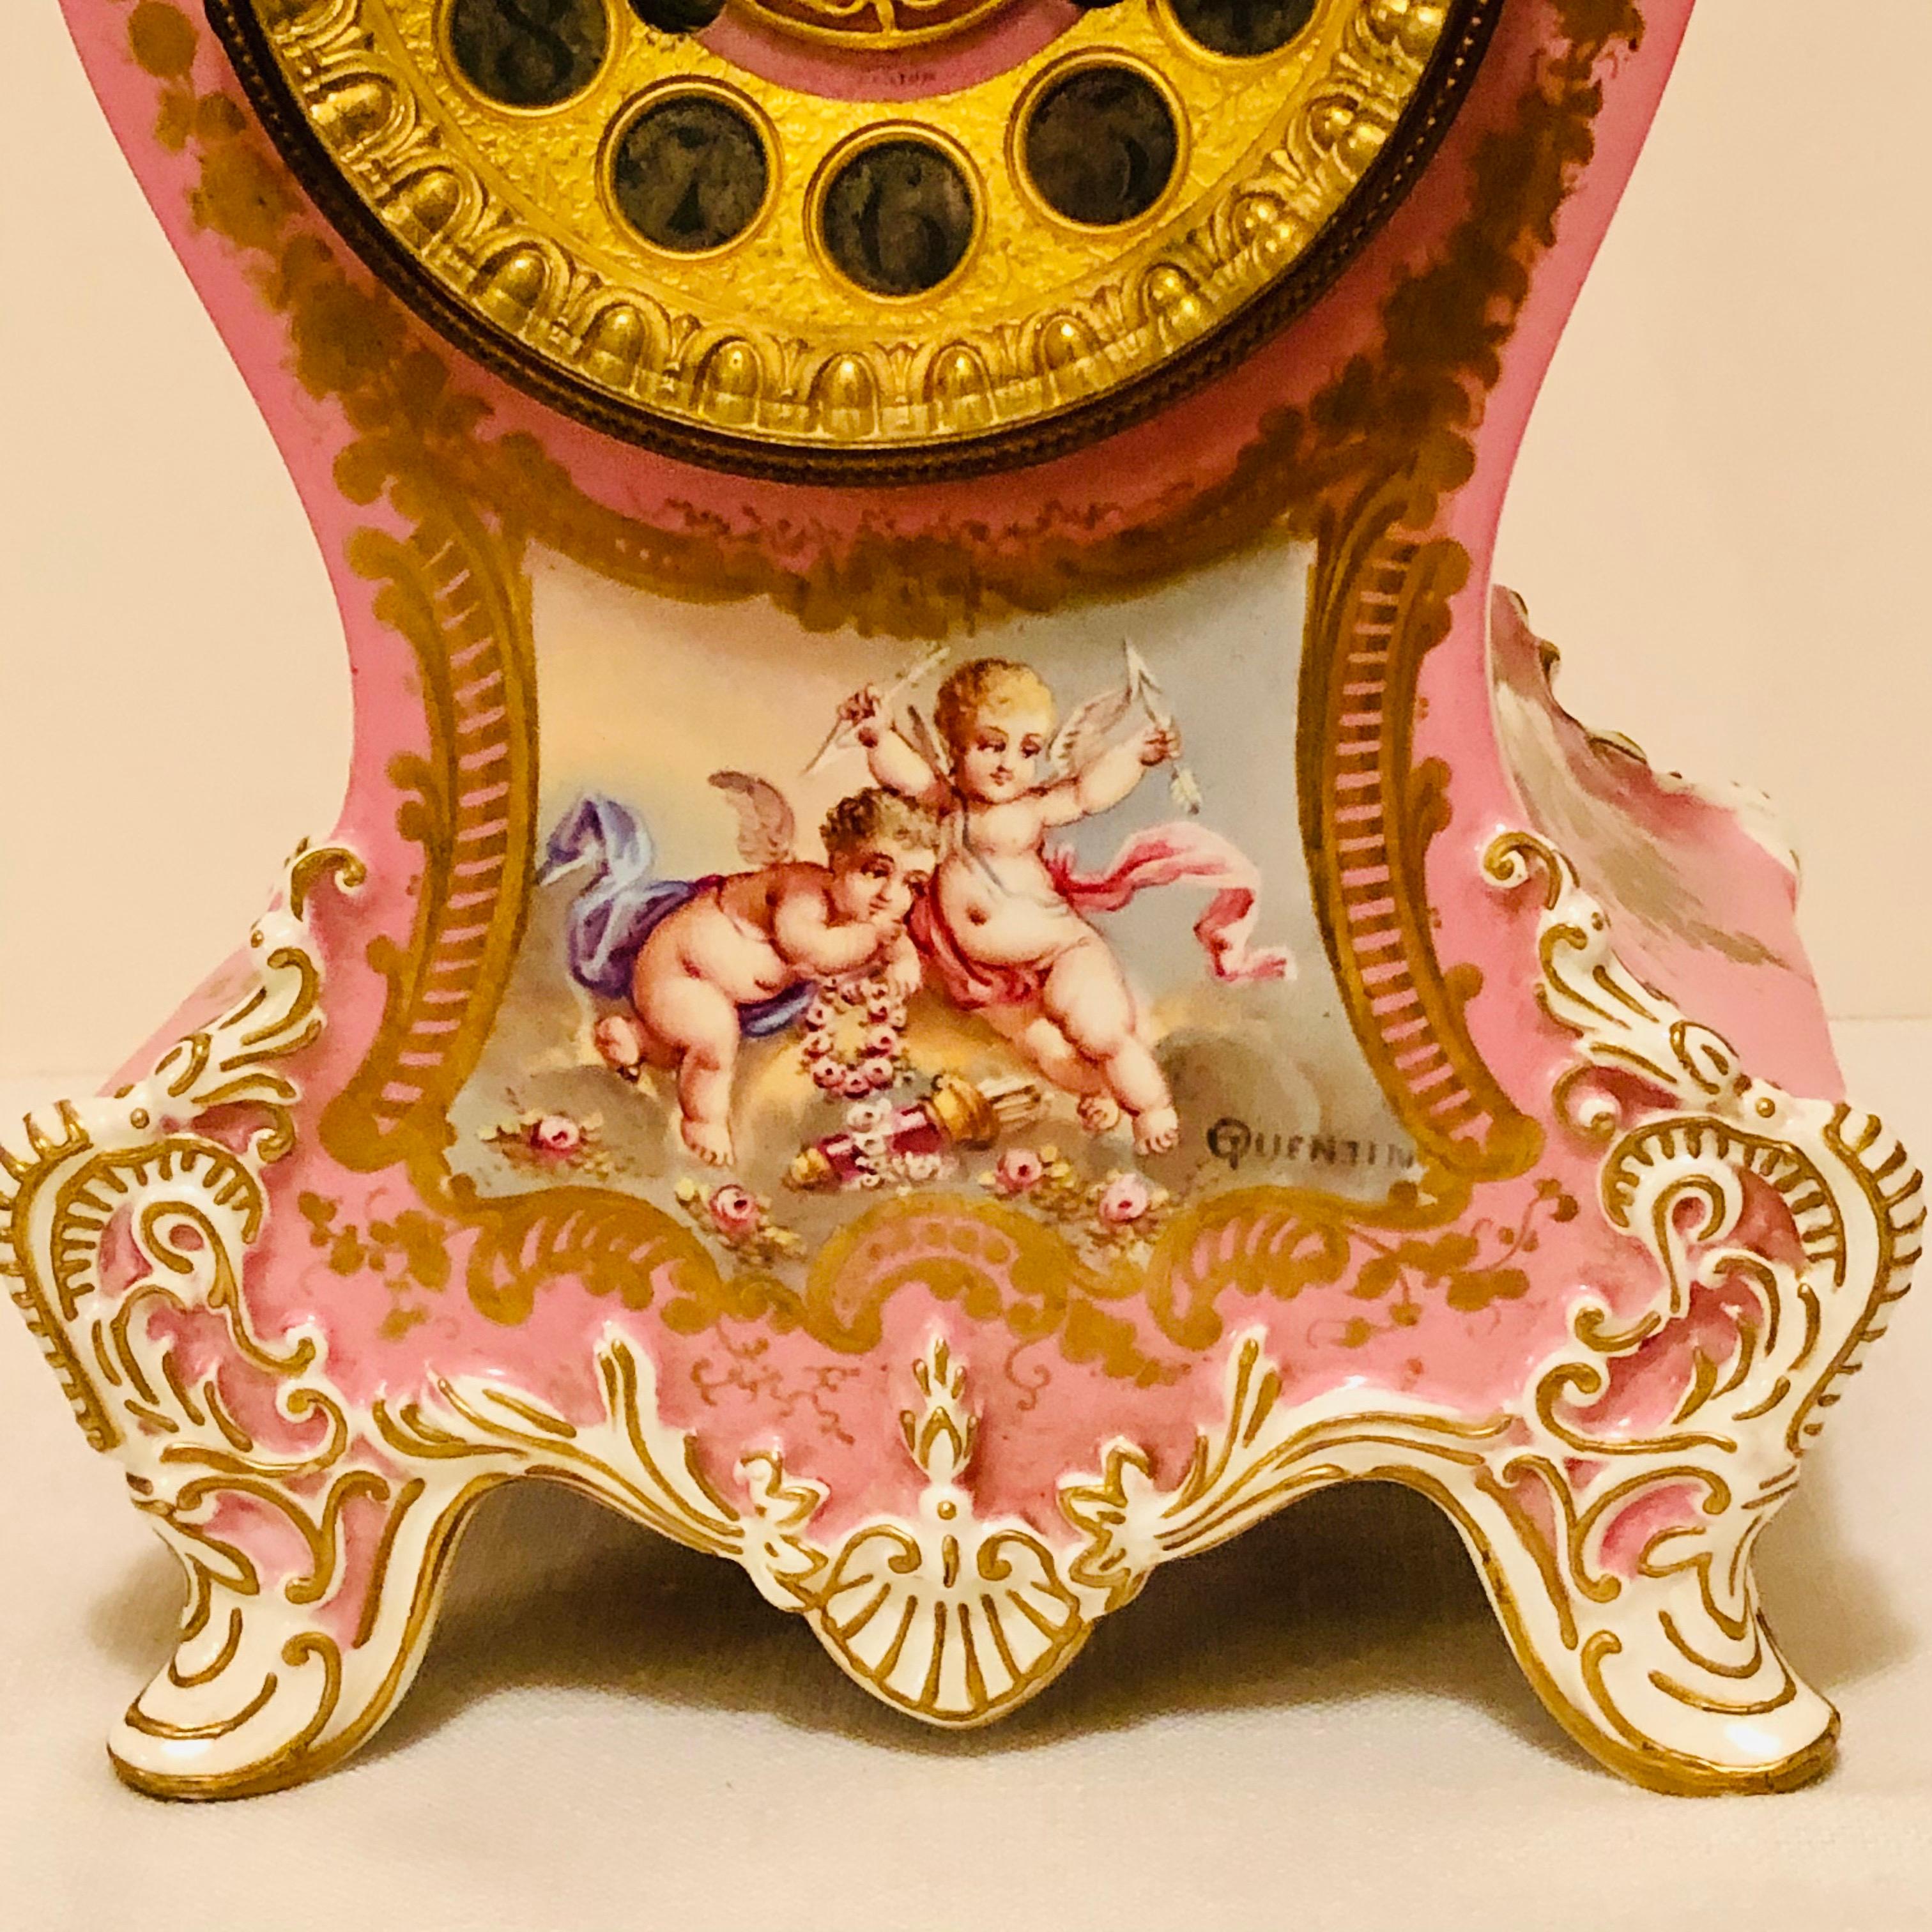 French Pink Pompadeur Longwy Mantel Clock with Etienne Maxant Brevete Works 1